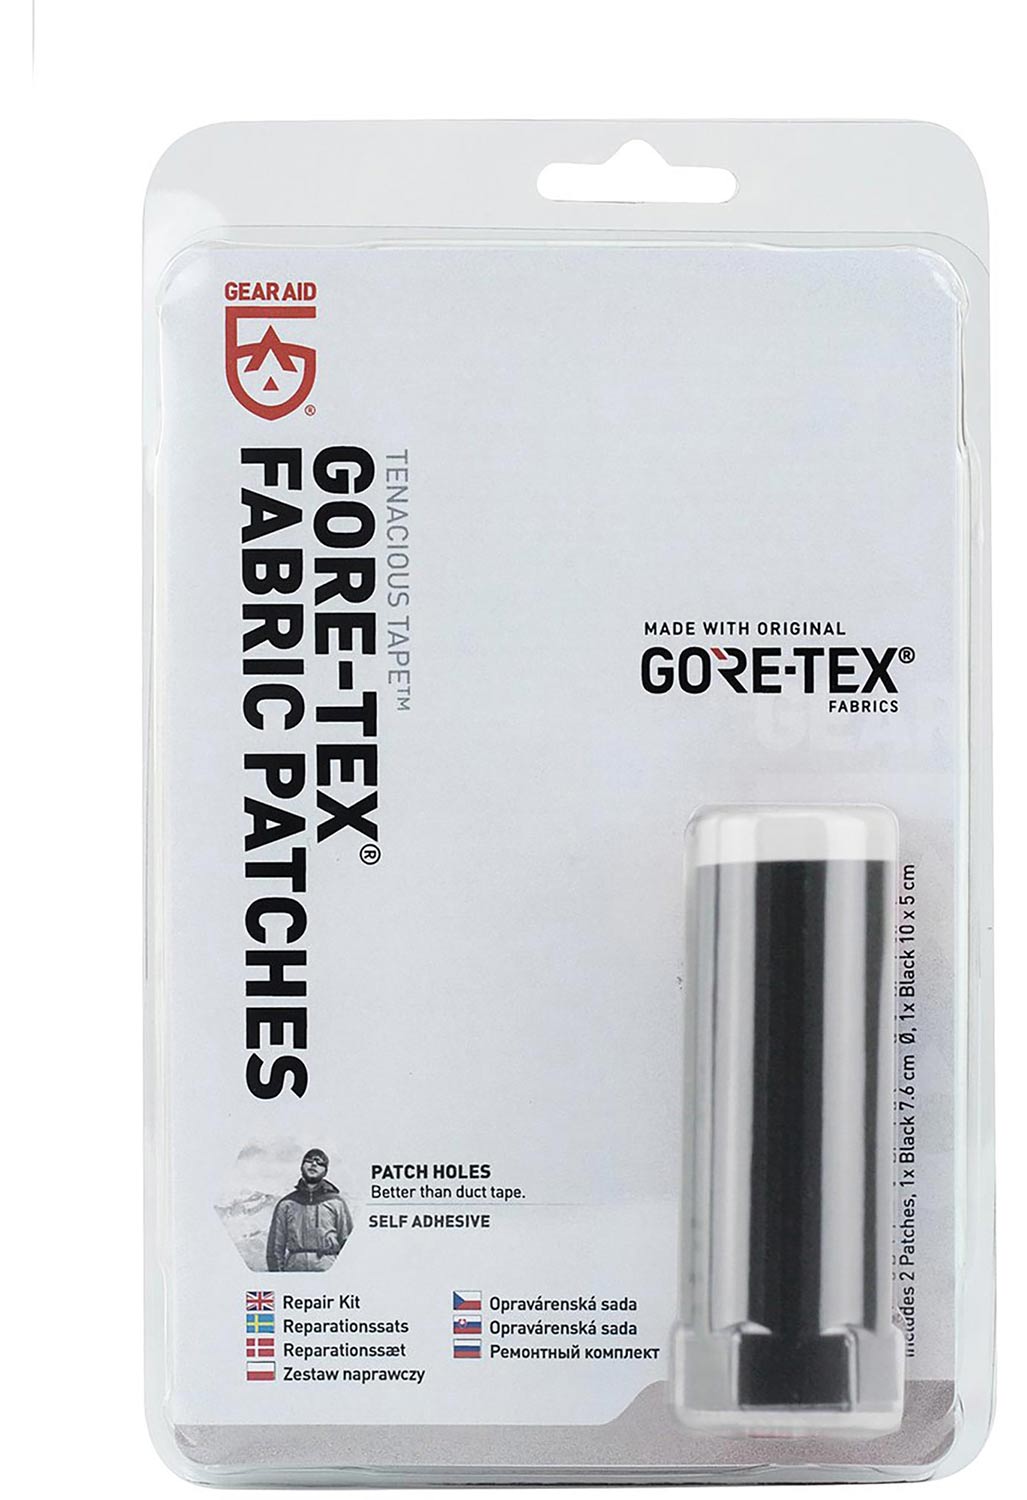 Gear Aid GORE-TEX Repair Kit 0